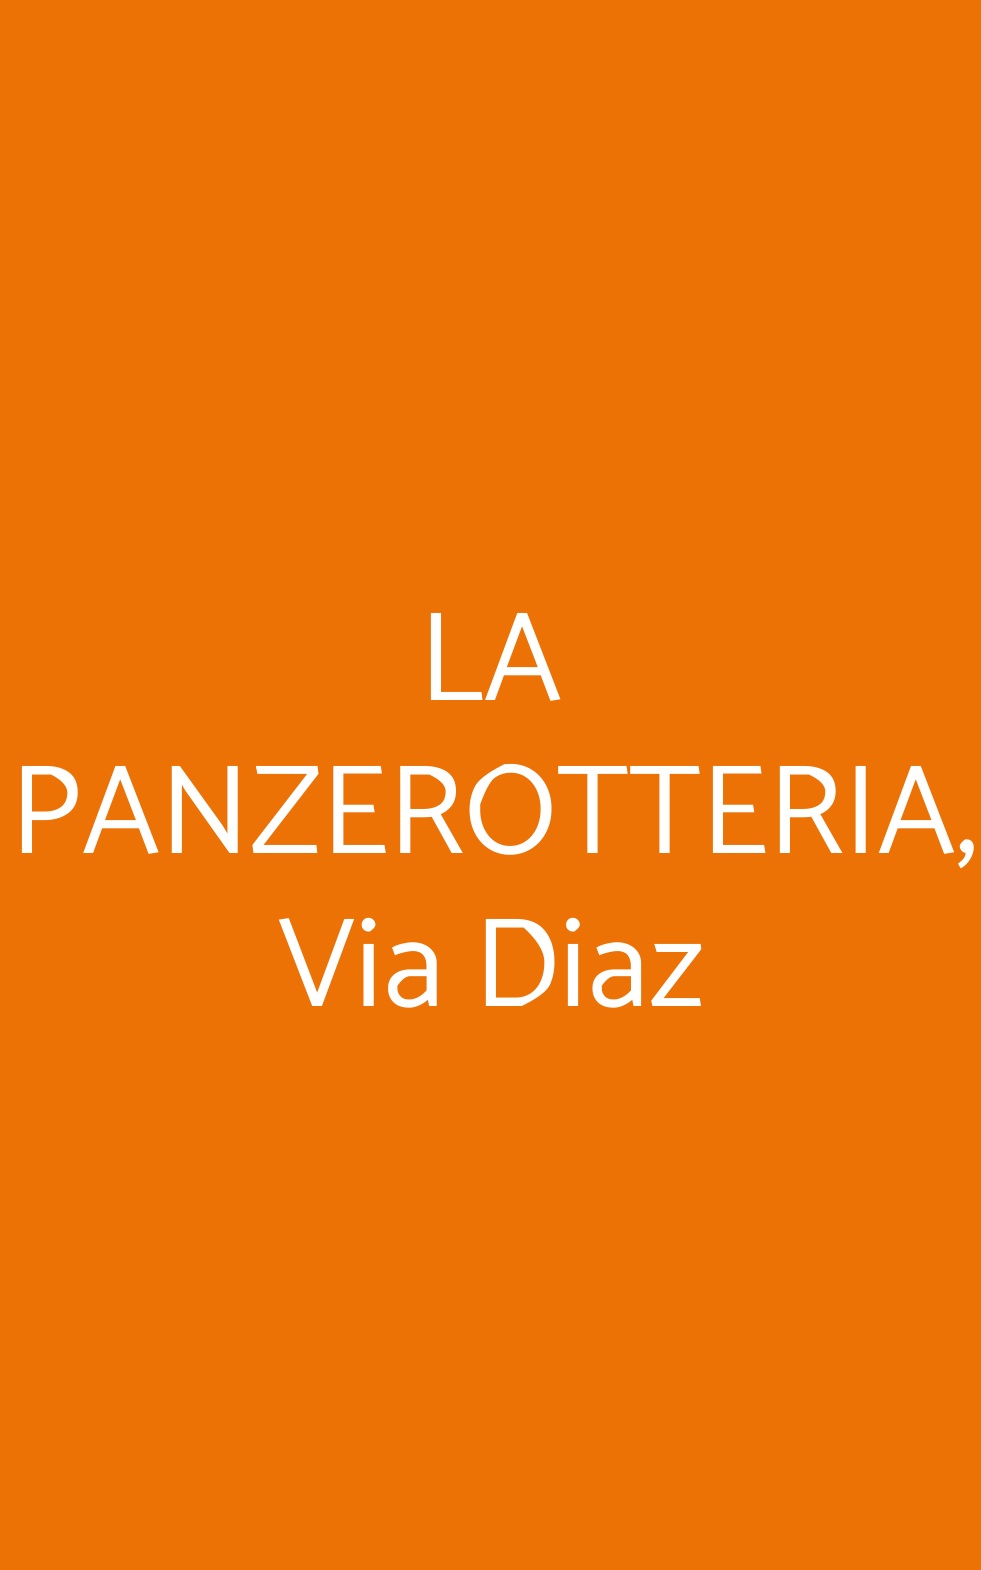 LA PANZEROTTERIA, Via Diaz Verona menù 1 pagina